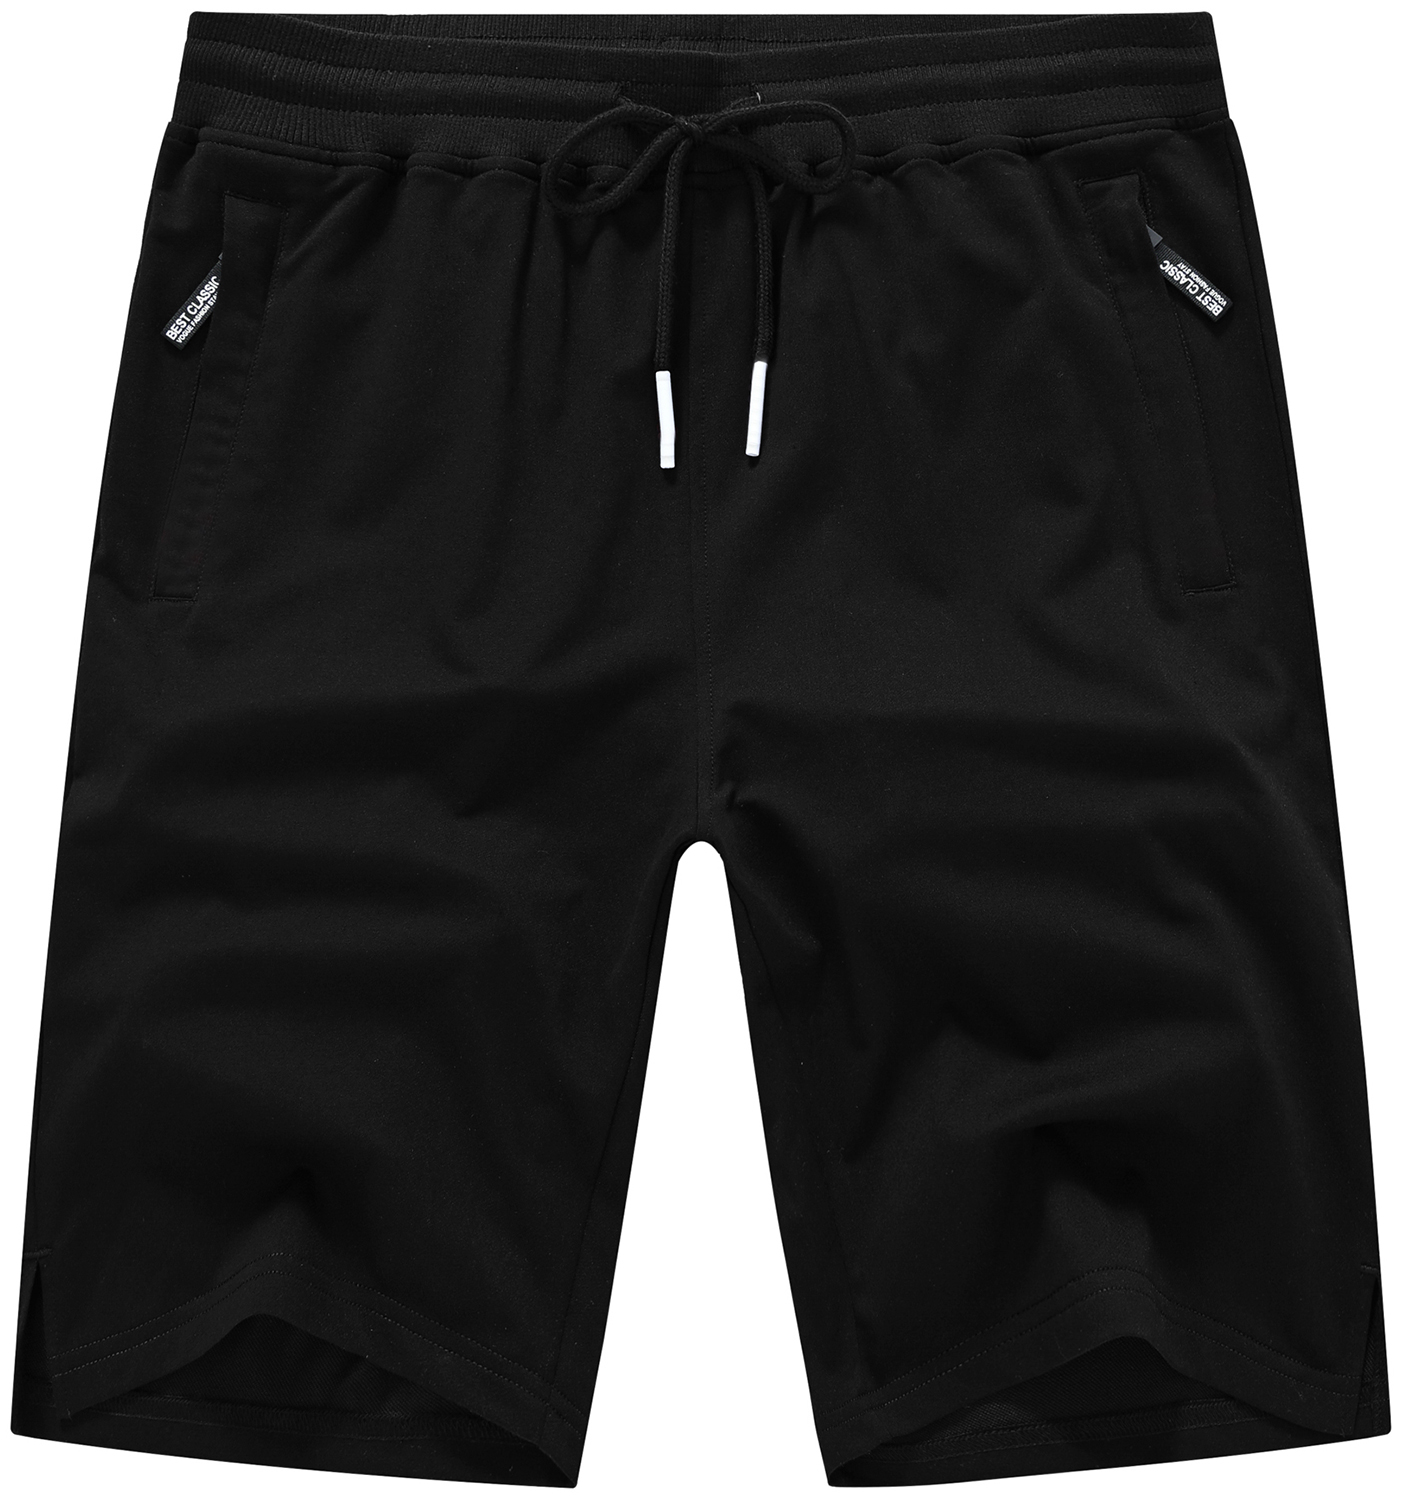 EDHITNR Mens Workout Shorts Leisure Slim Fit Elastic Waist Shorts for ...